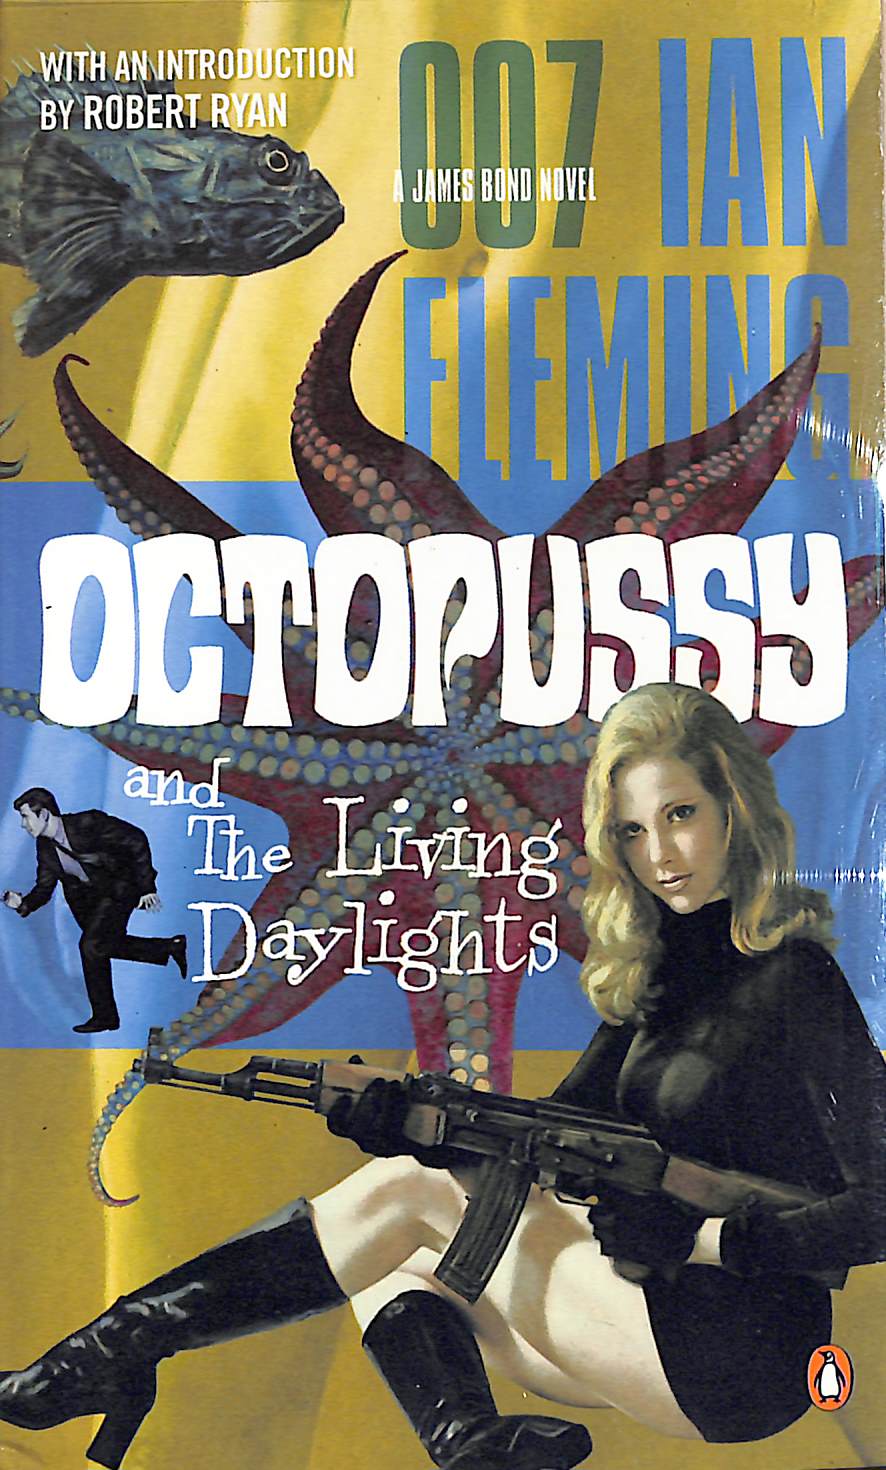 "Octopussy" 2006 FLEMING, Ian